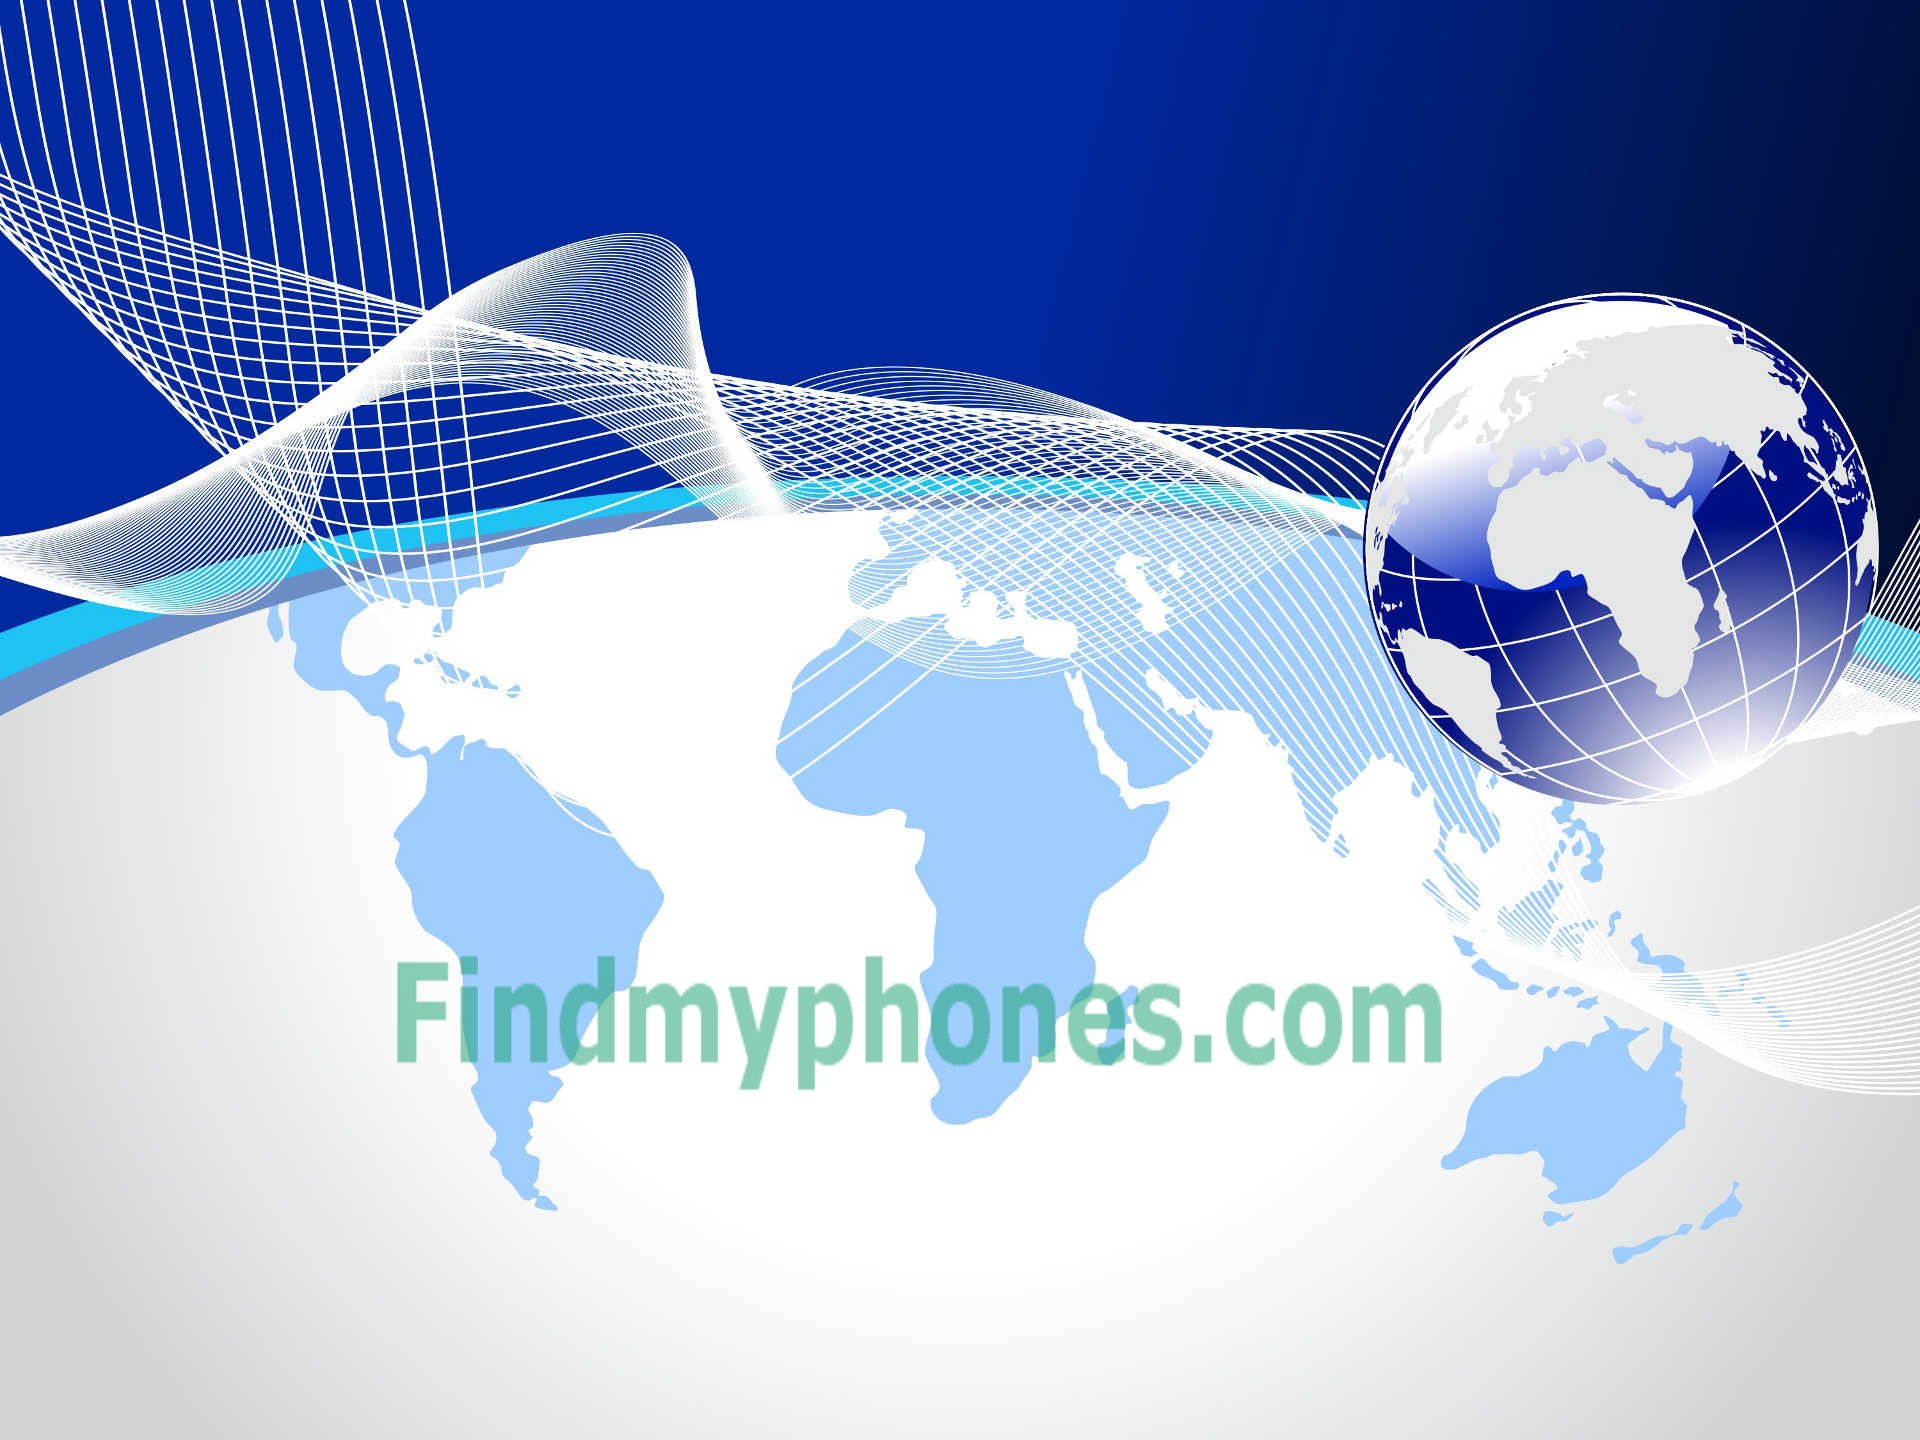 FindMyphones background